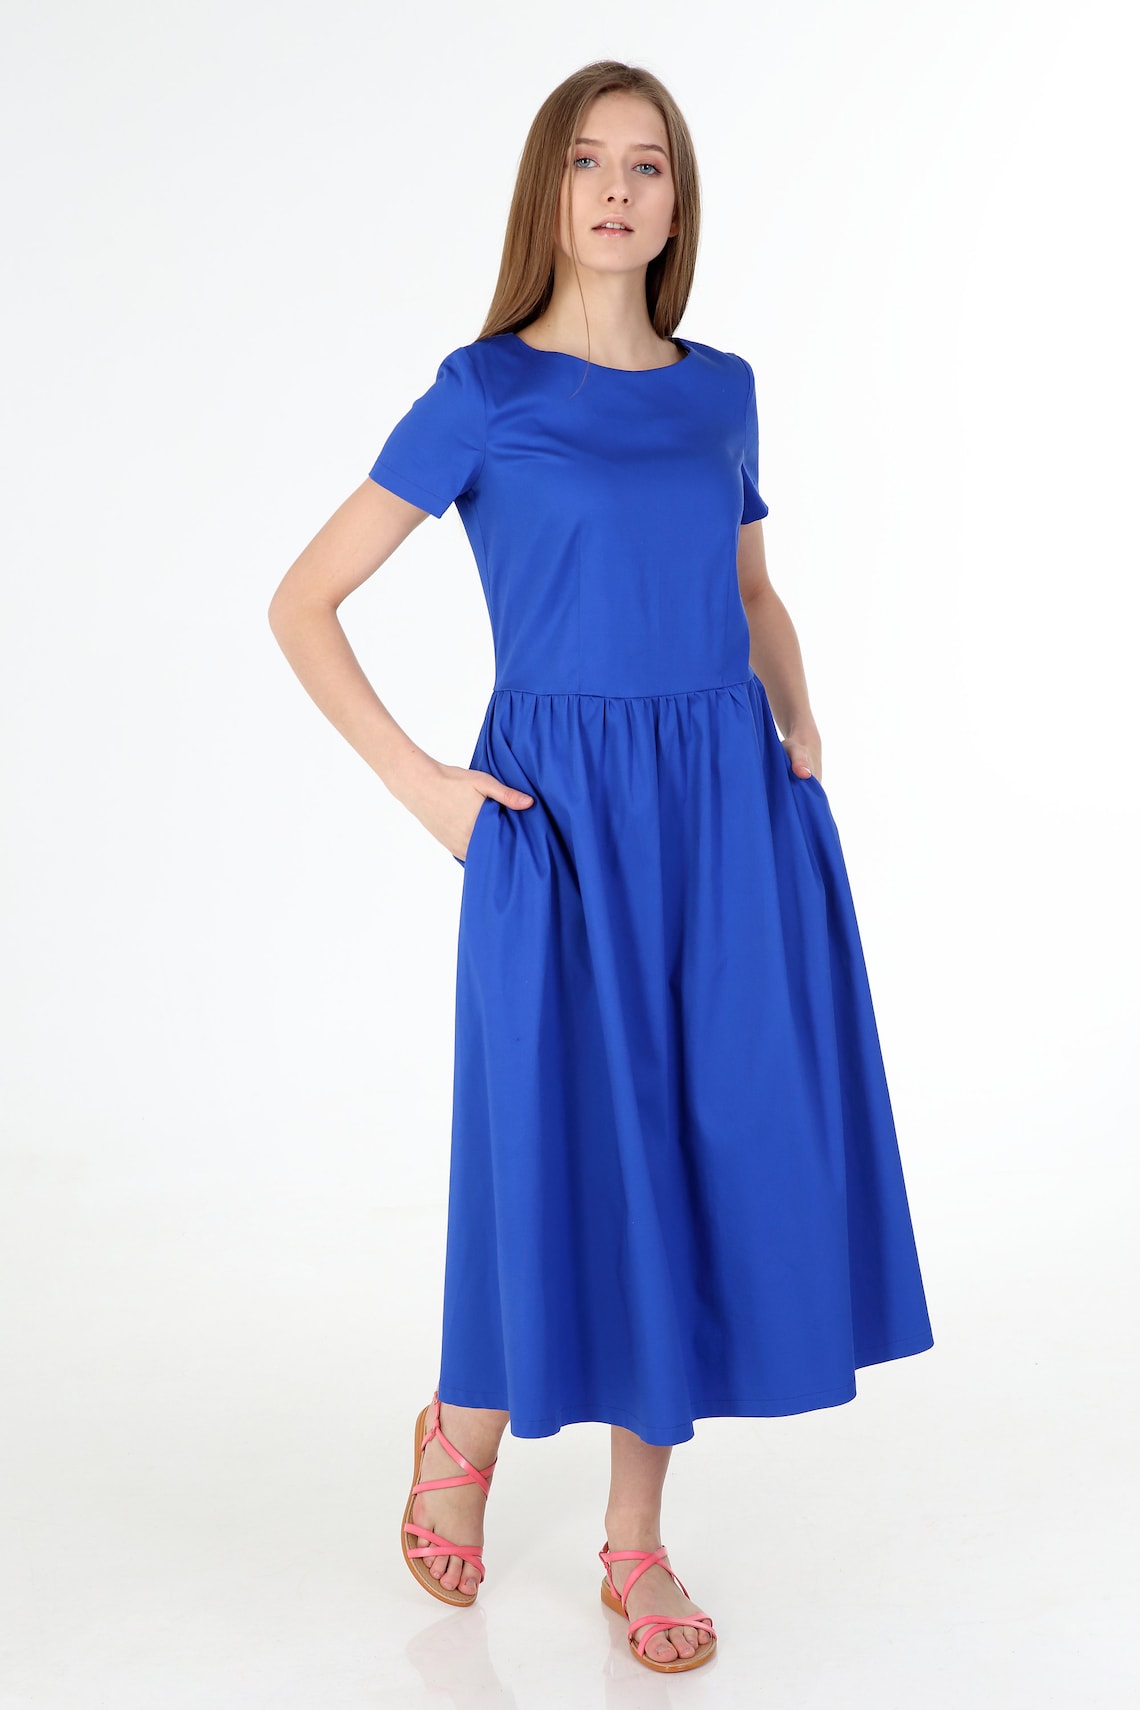 Midi Dress Casual Summer Dress Drop Waist Dress Pleated | Etsy